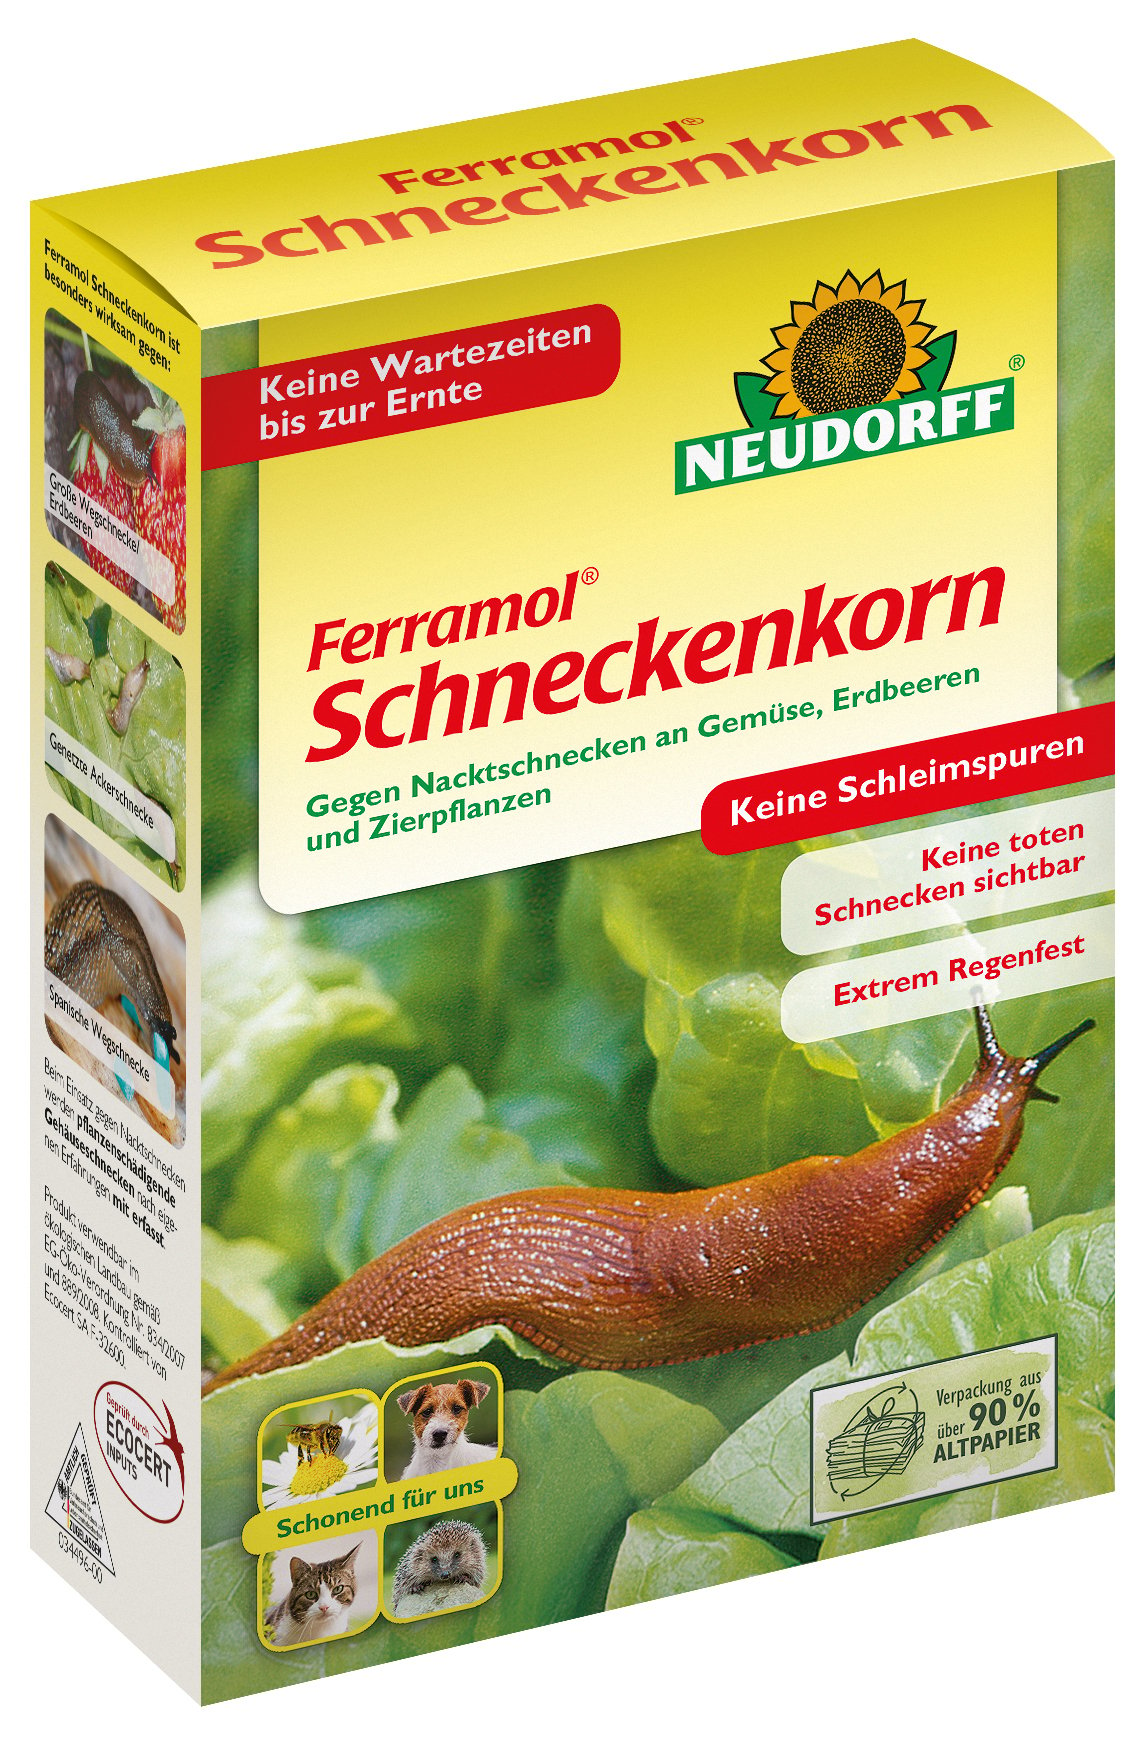 W. Neudorff GmbH KG Ferramol Schneckenkorn